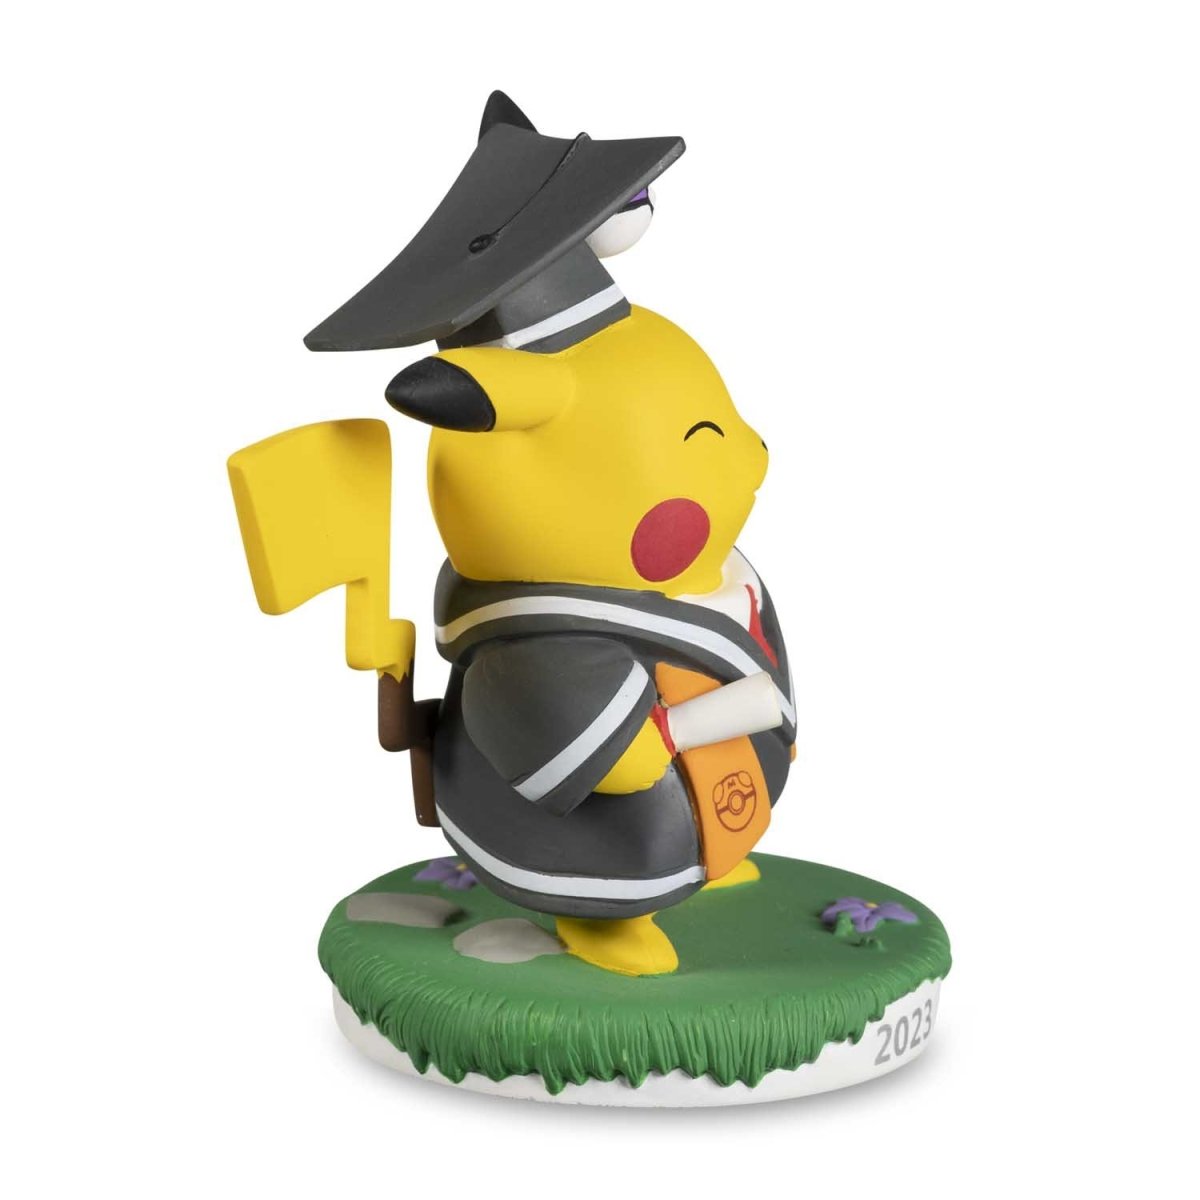 Pokémon Graduation Pikachu 2023: Pikachu (Male) Figure-Pokemon Centre-Ace Cards &amp; Collectibles